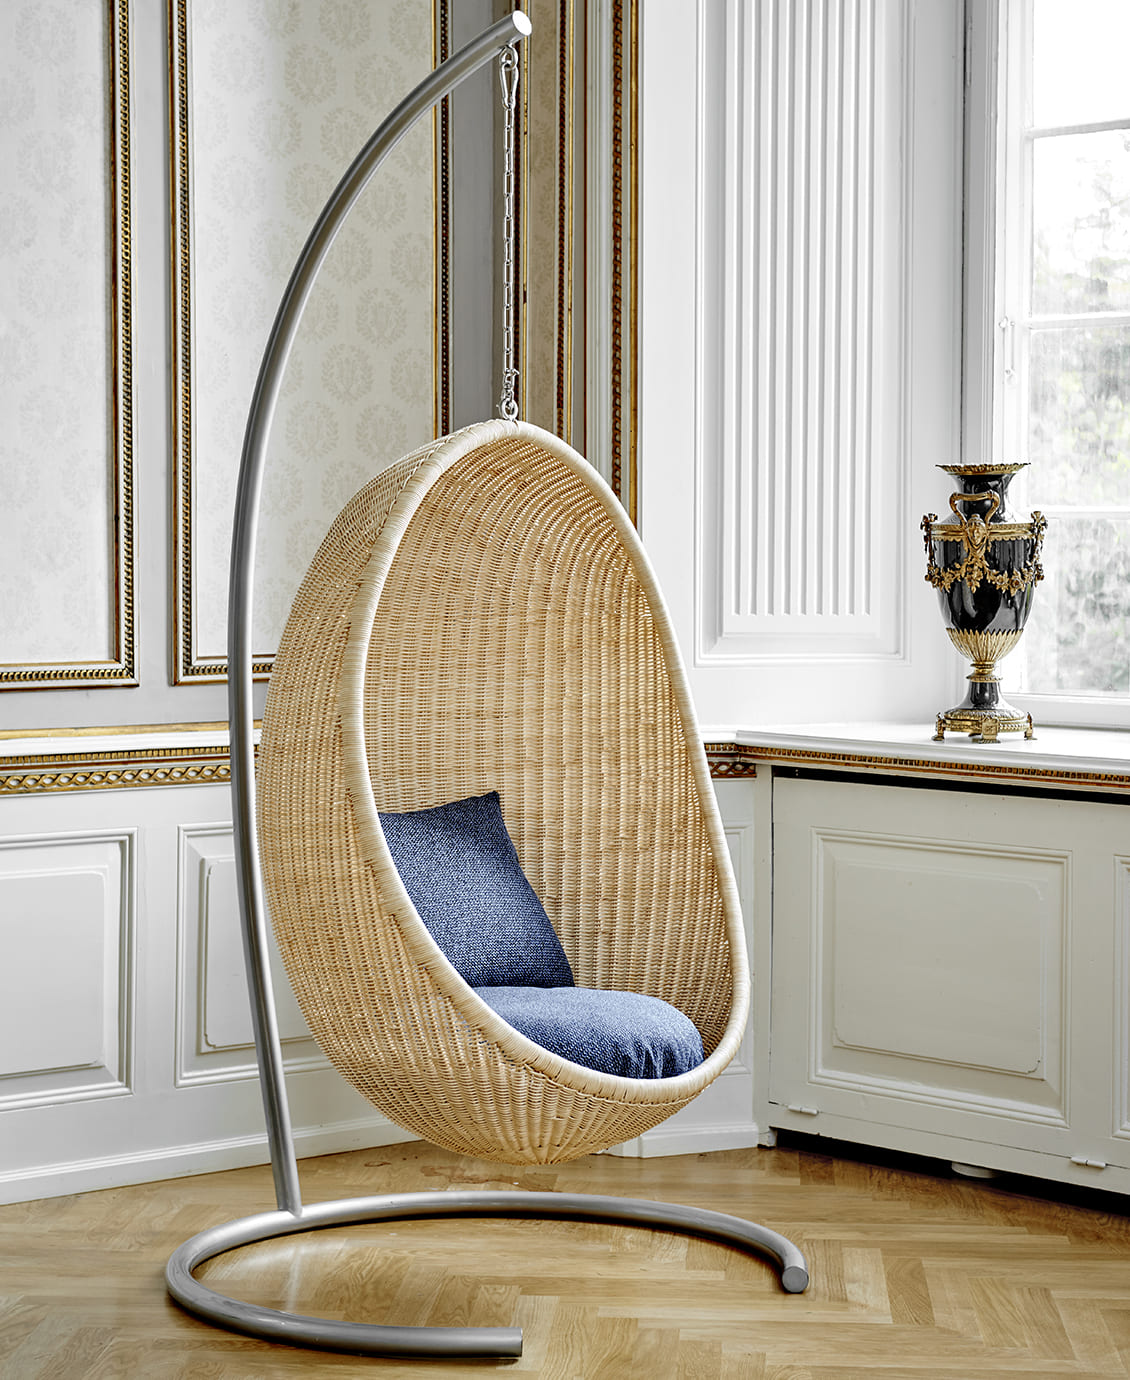 Hanging Egg Chair - gasparinicollection.com